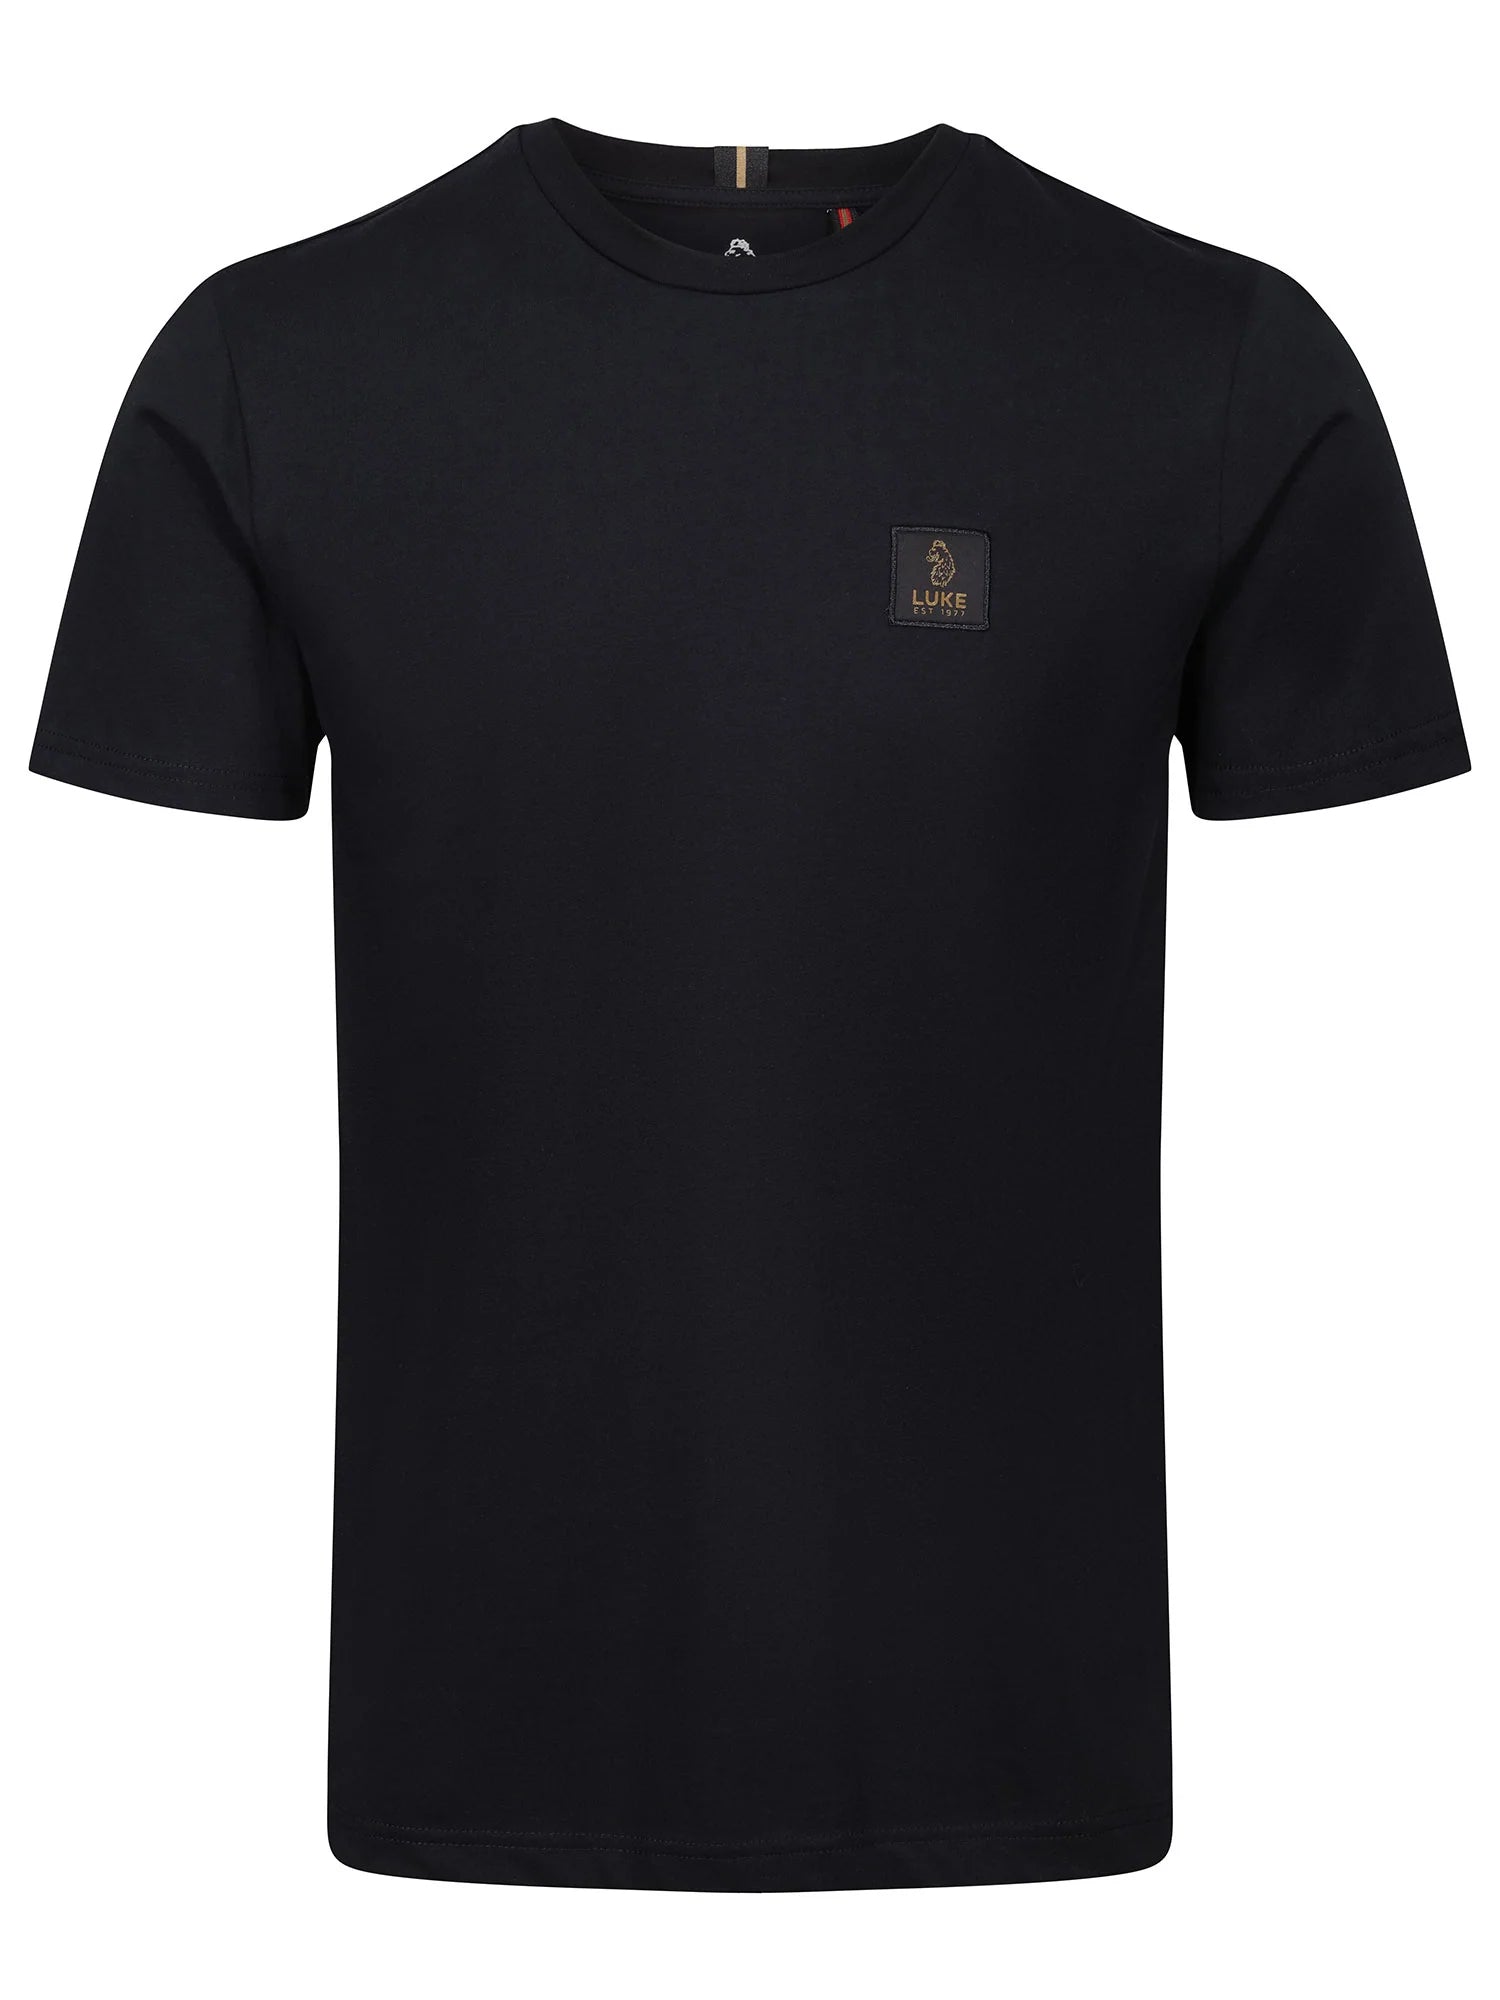 Luke Brunei T-Shirt Black